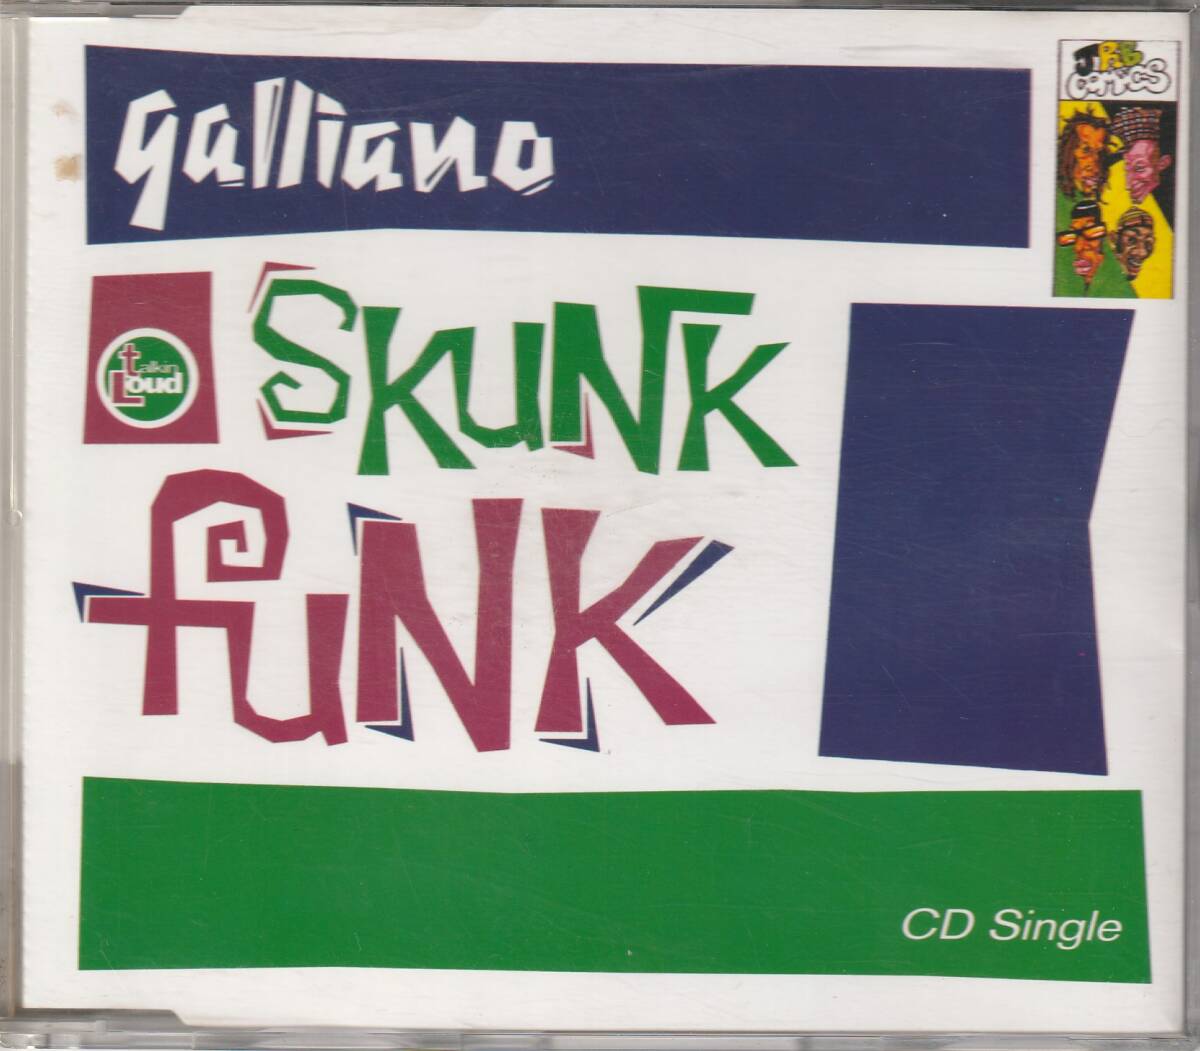 UK盤CDS★Galliano★Skunk Funk★92年★Mick Talbot★Acid Jazz★試聴可能の画像1